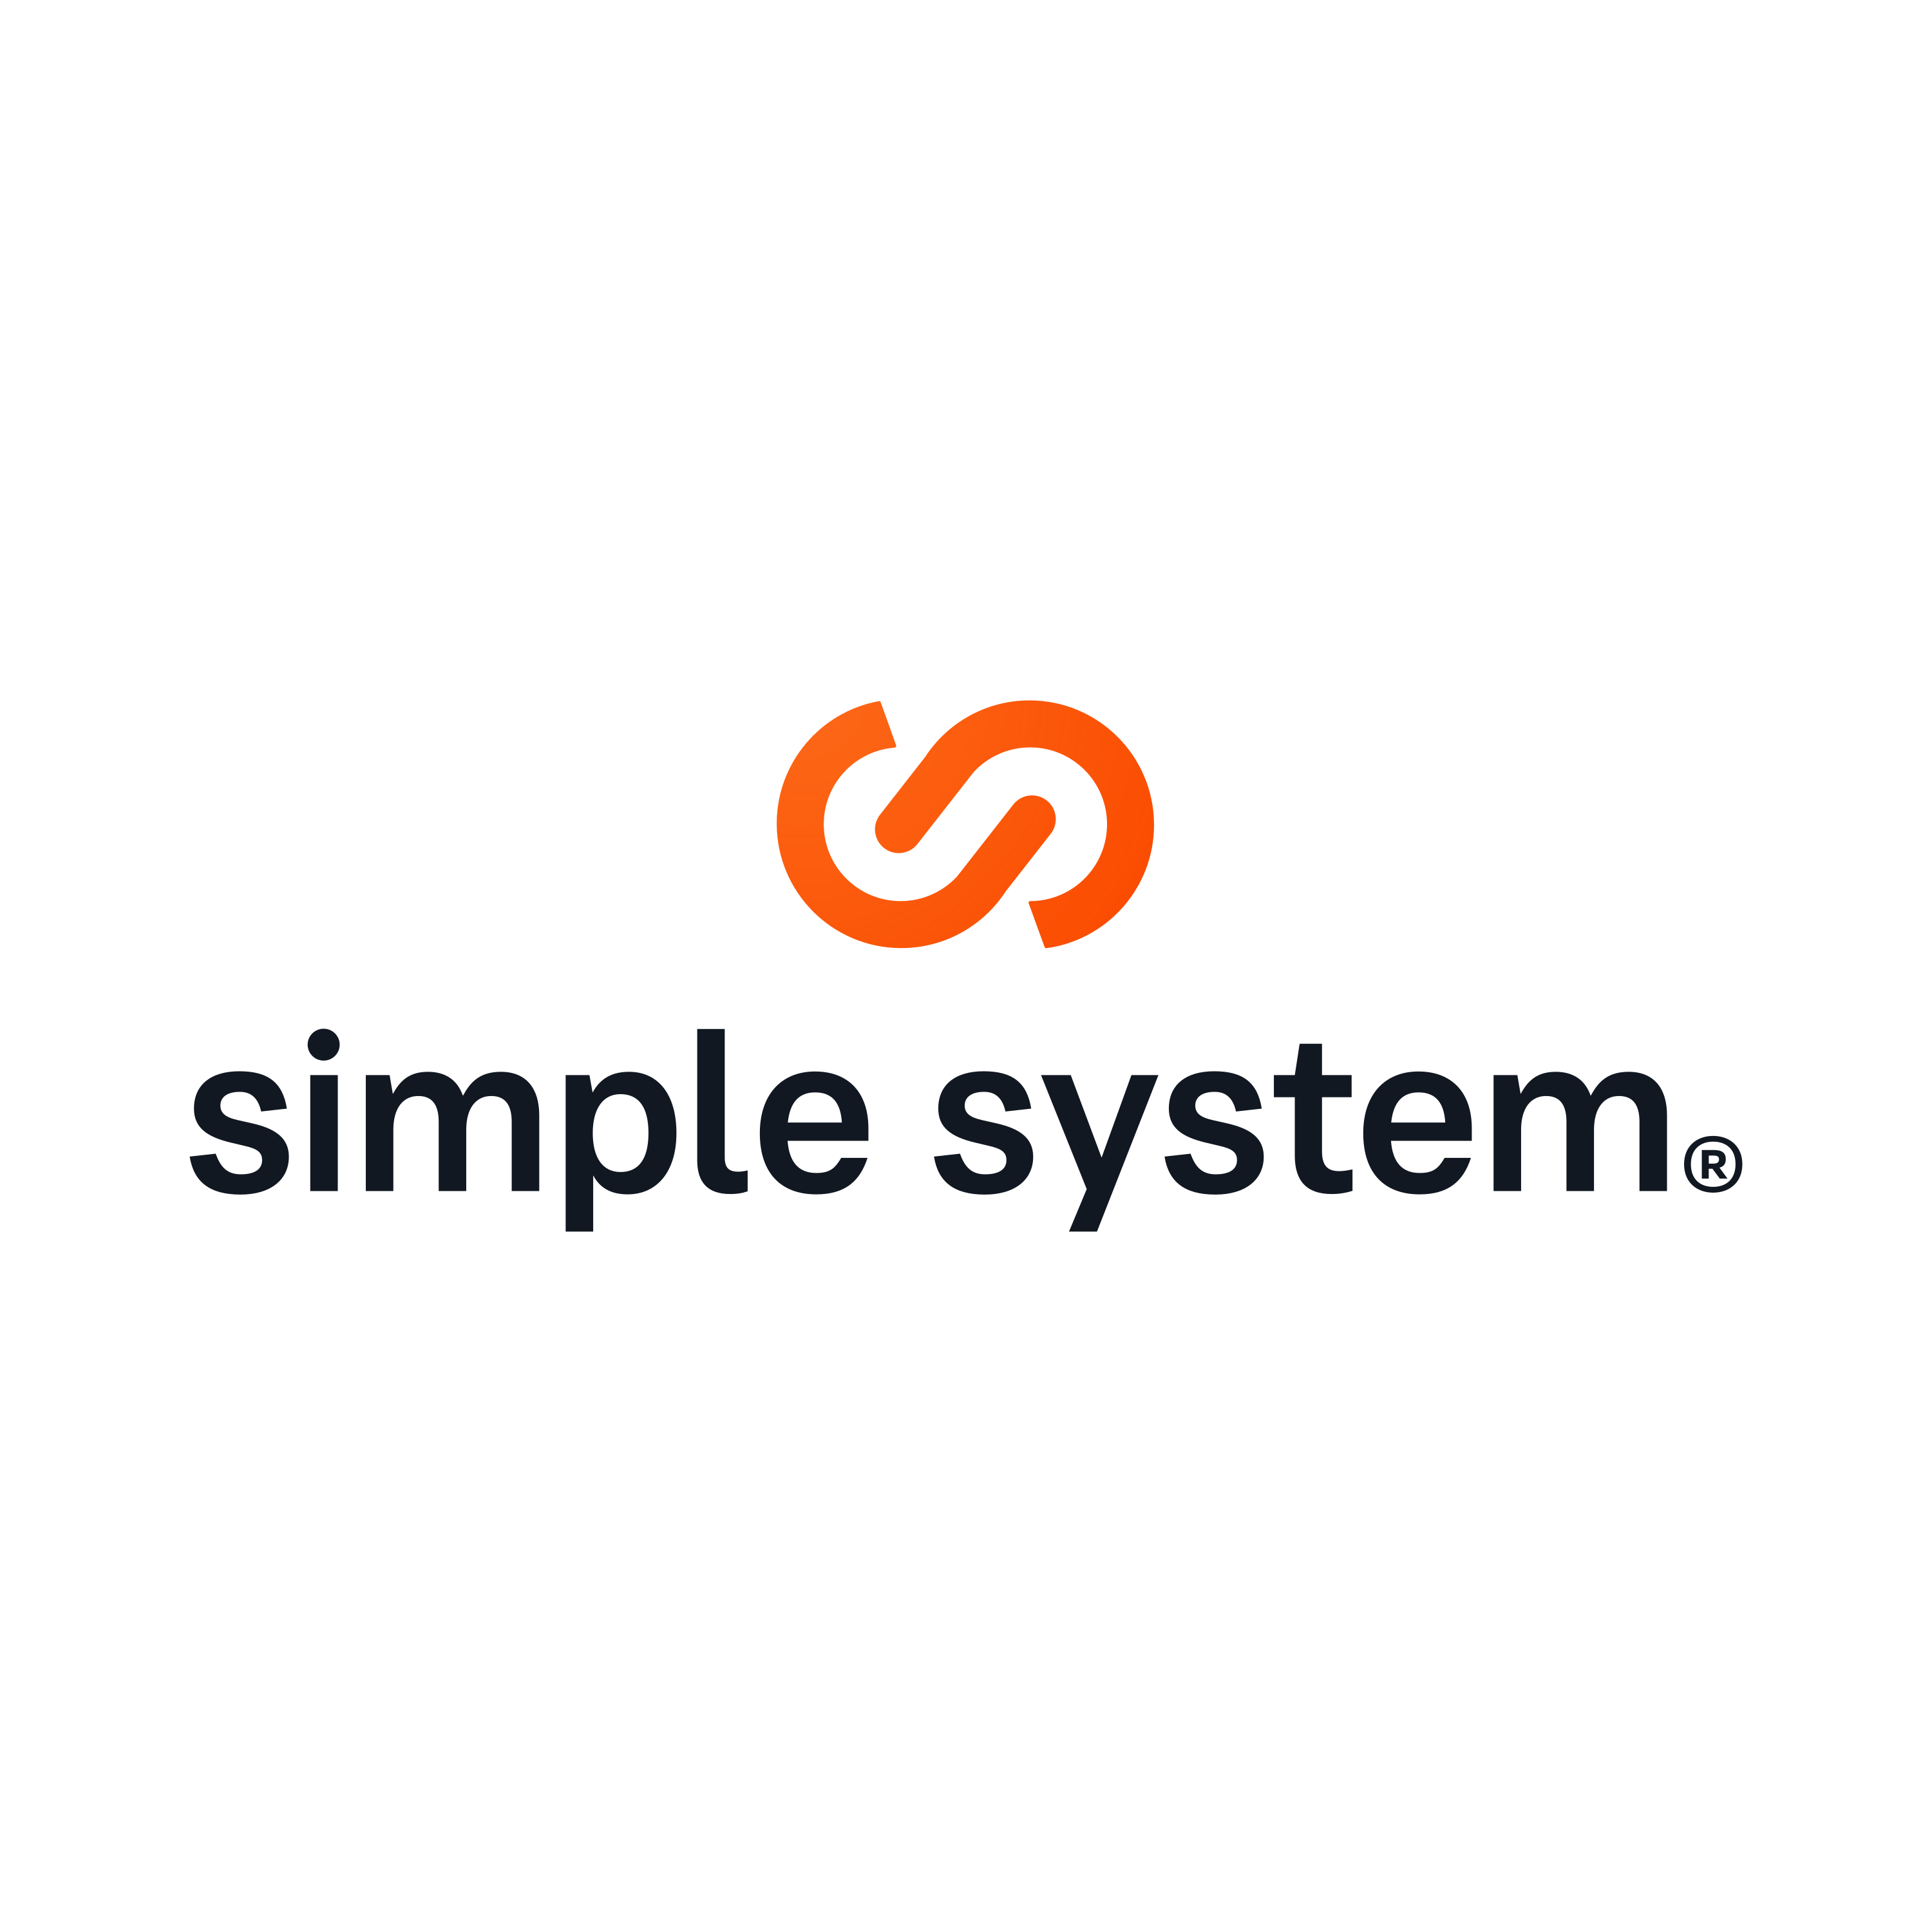 Simple System Logo  Transparent Image